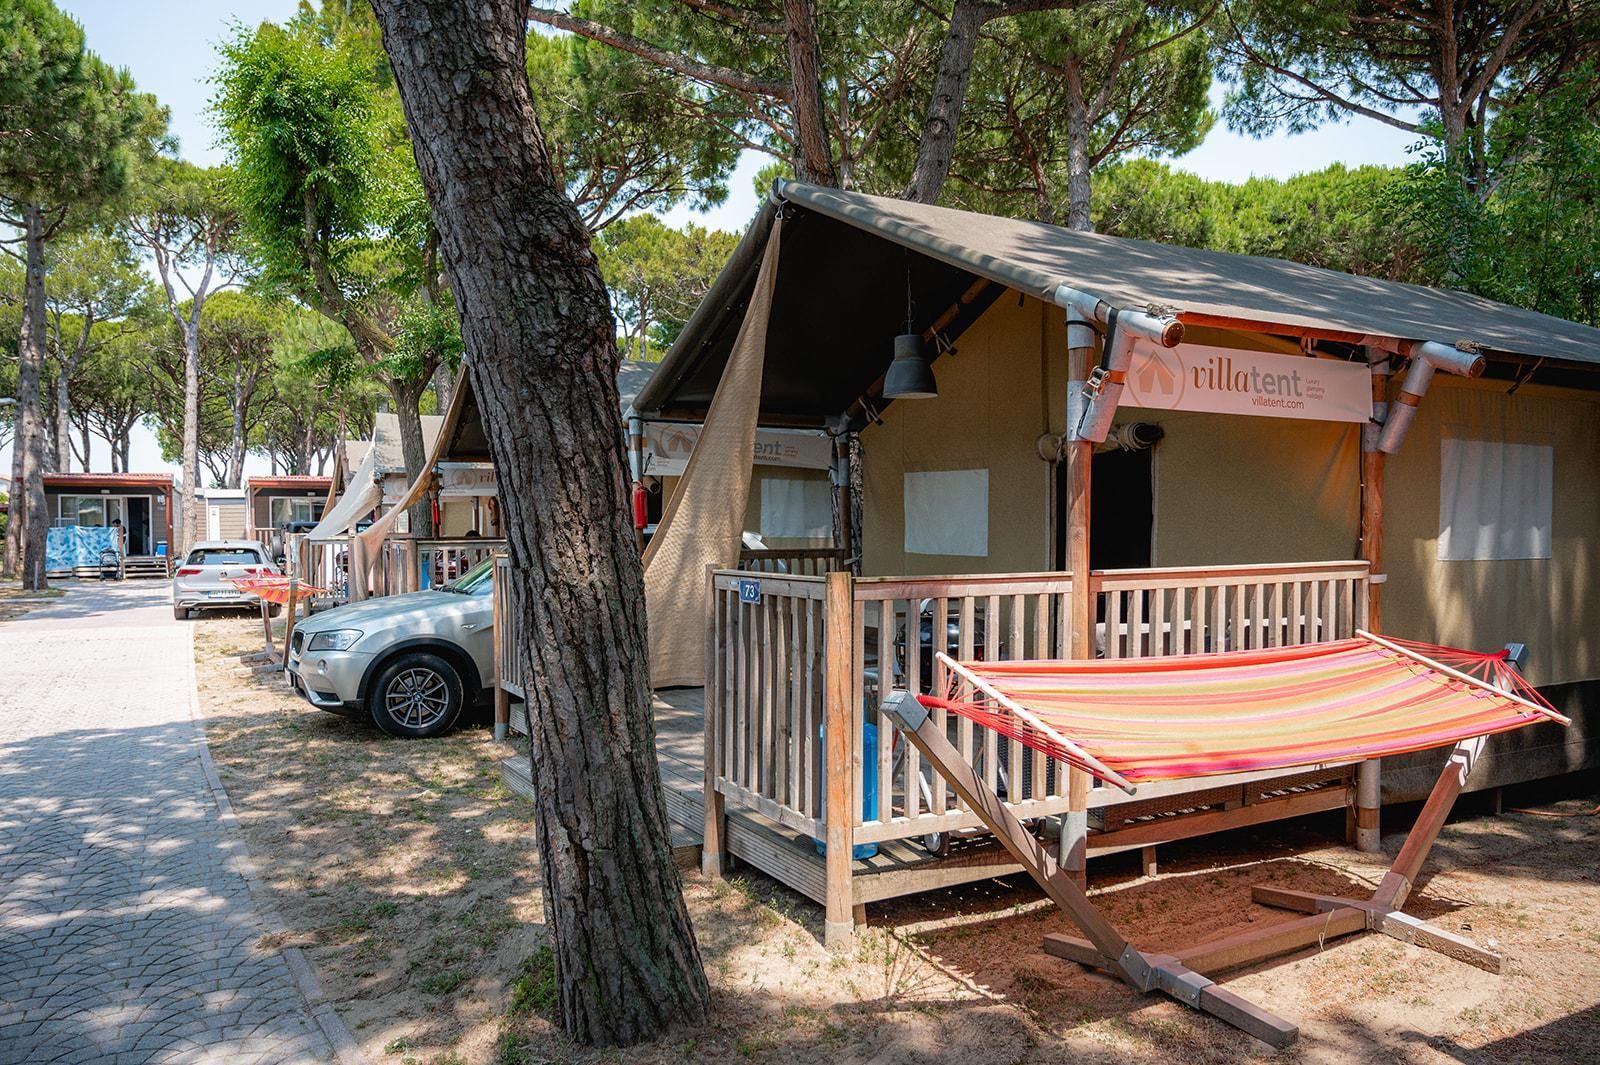 Campsite Village Cavallino | Luxe Sanitary 5 Pers.